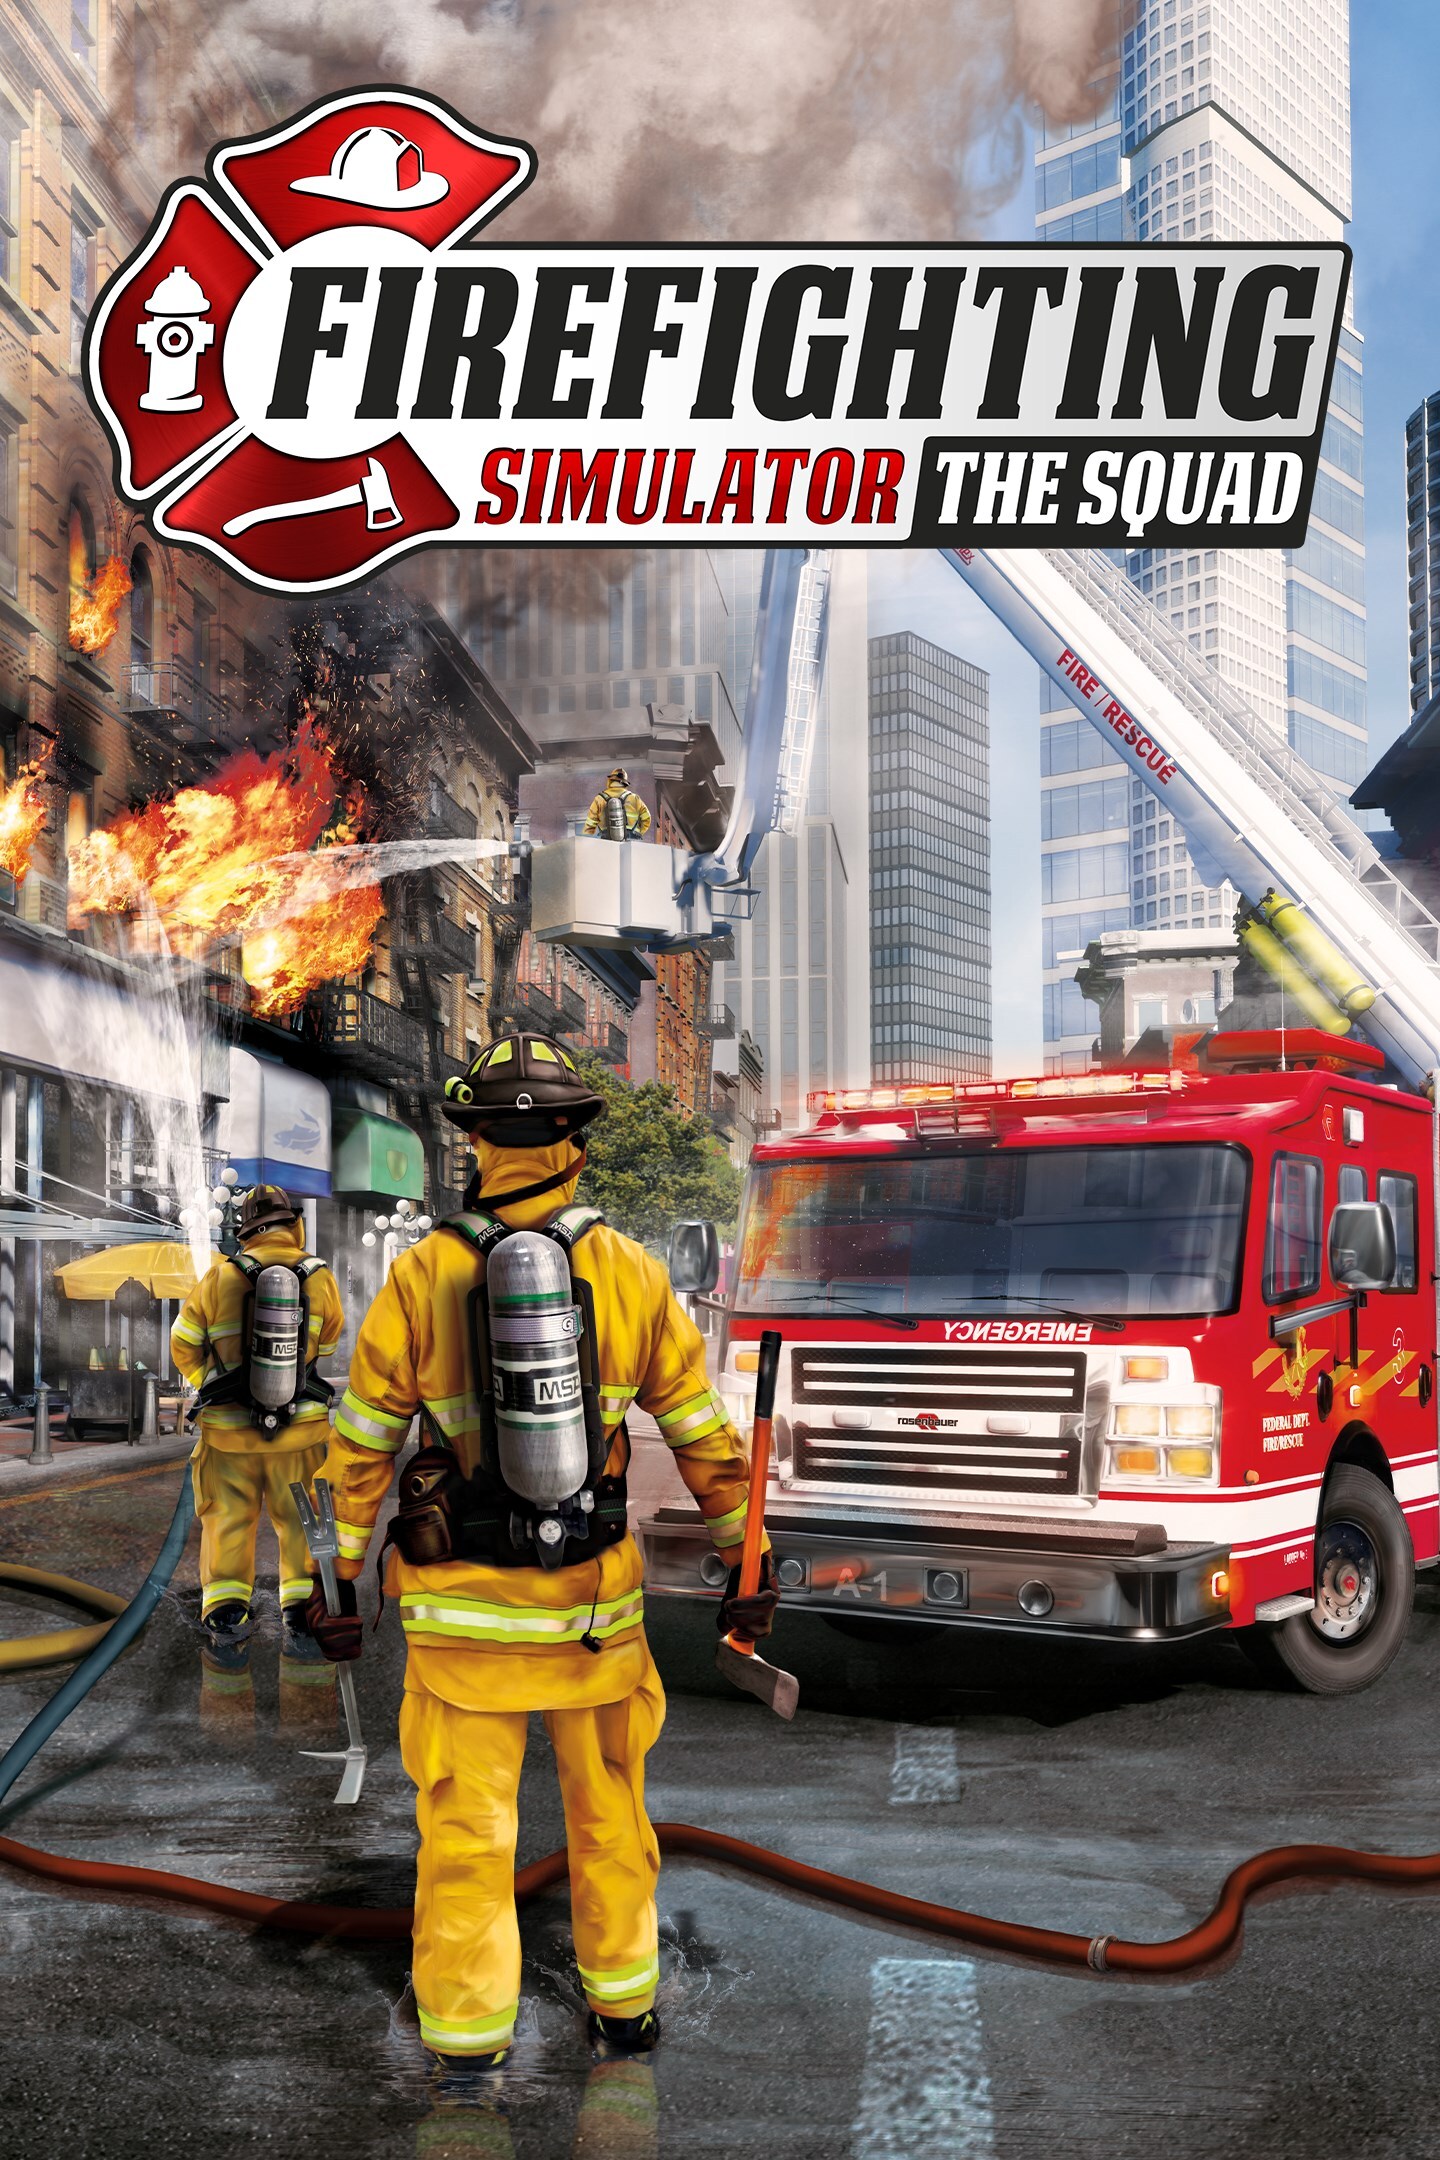 Firefighting Simulator - The Squad pic